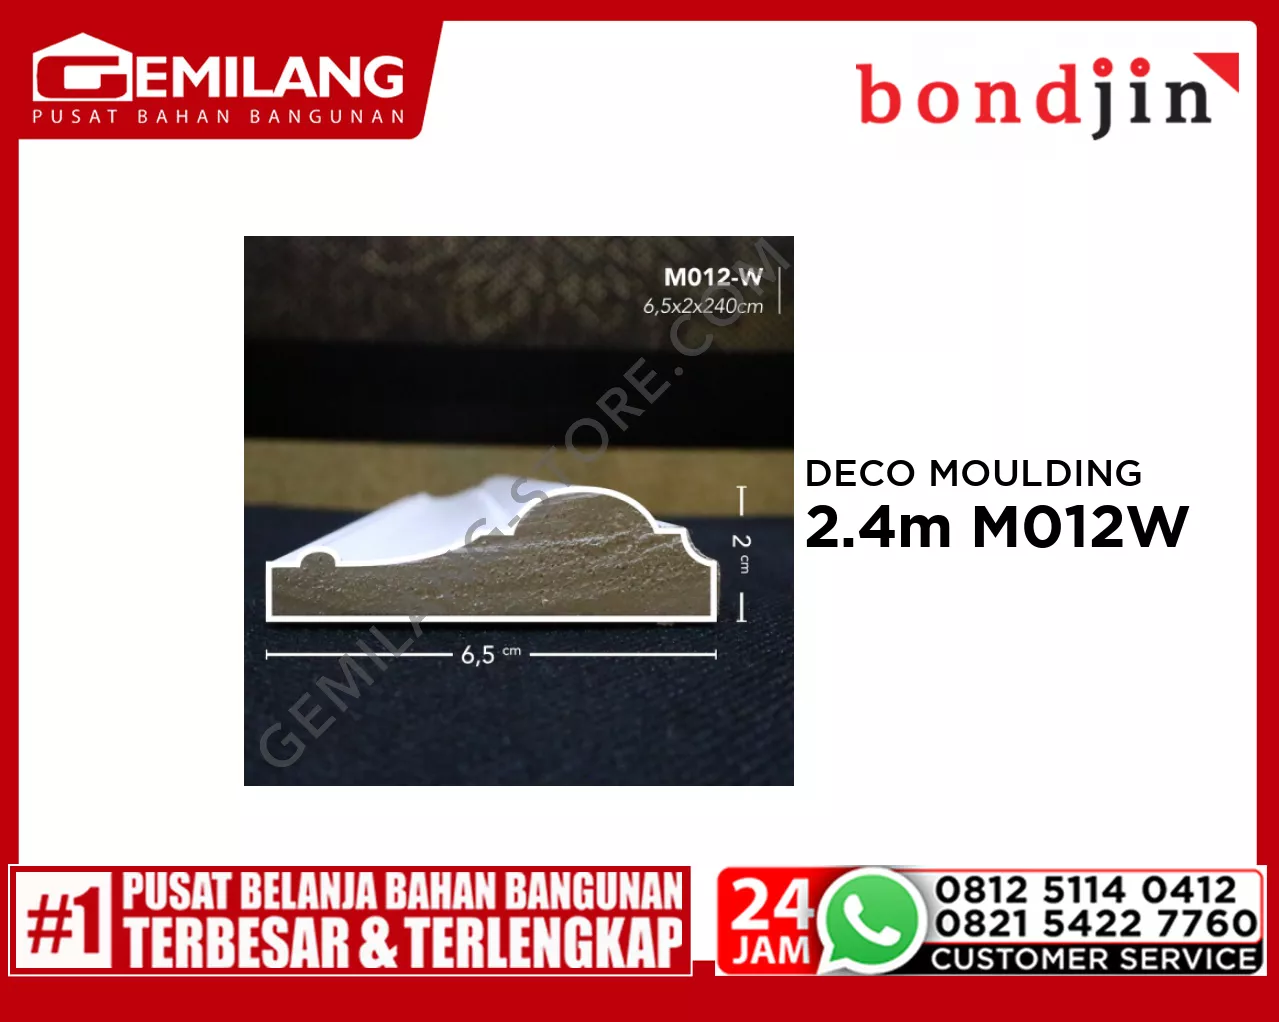 BONDJIN DOOR MOULDING 2.4M M012-W